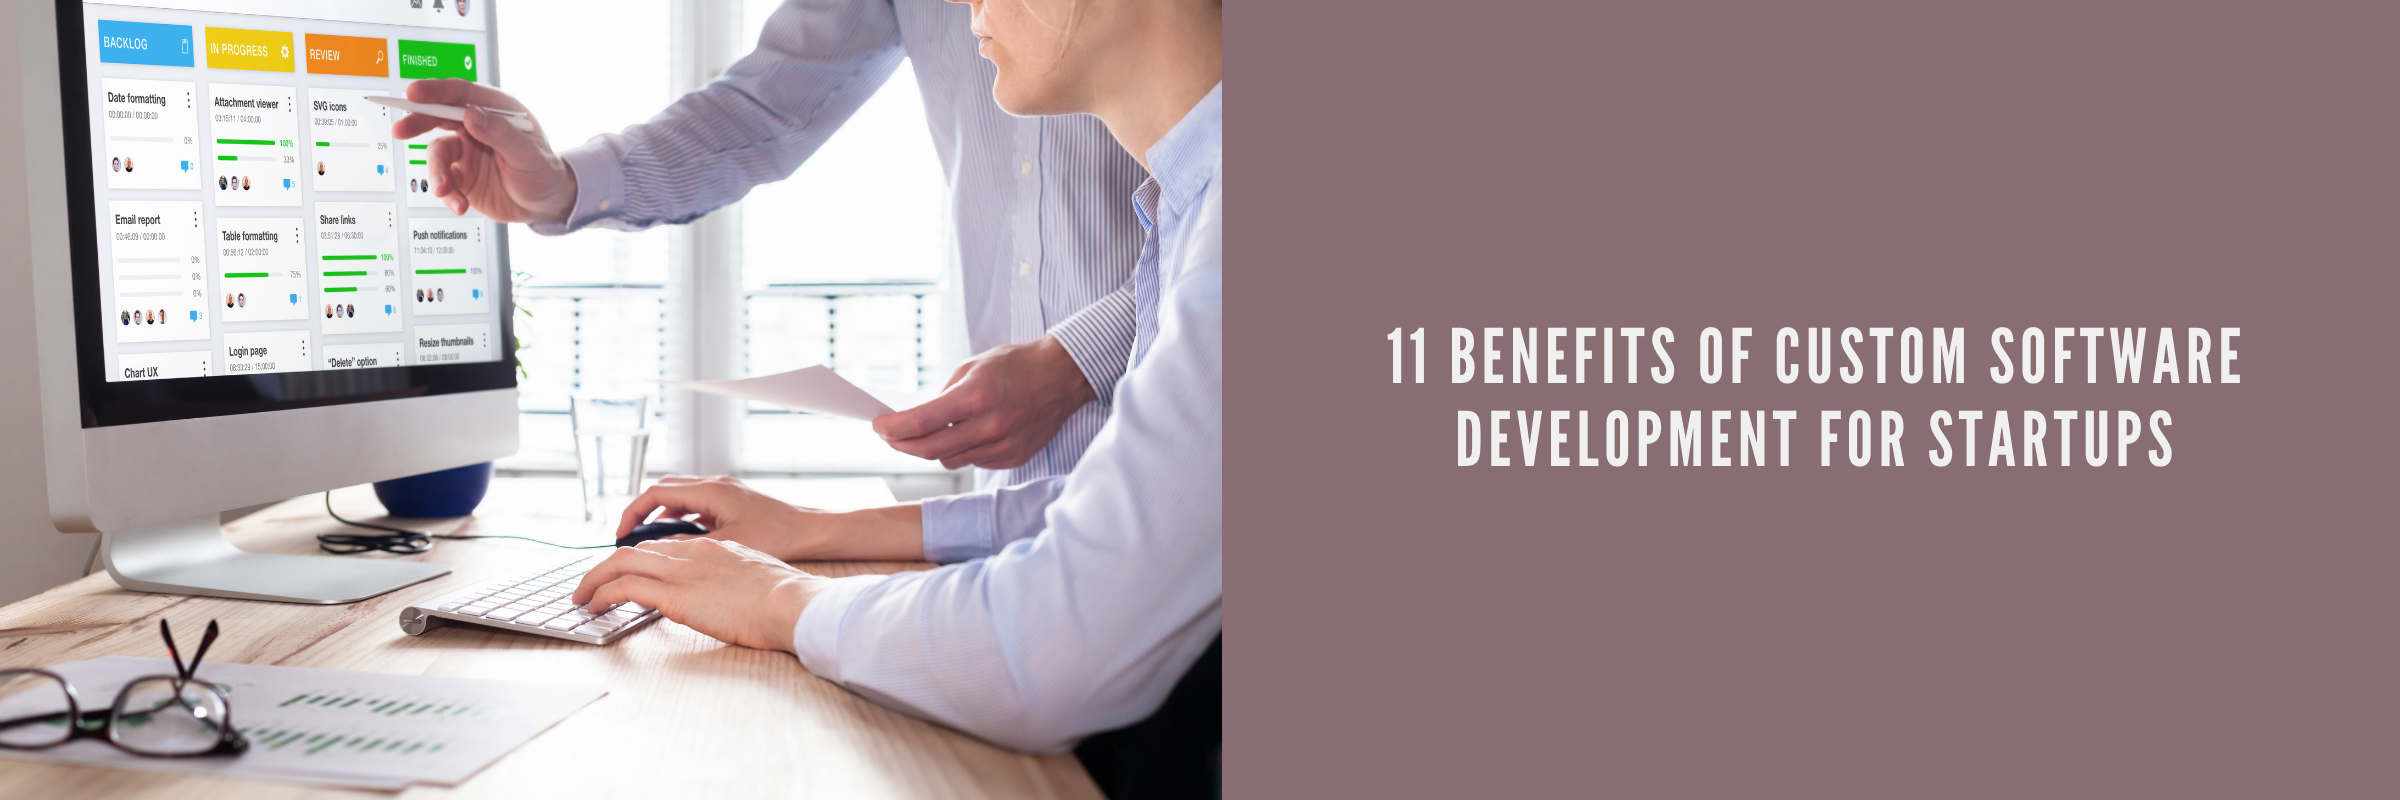 11 Benefits of Custom Software Development for Startups